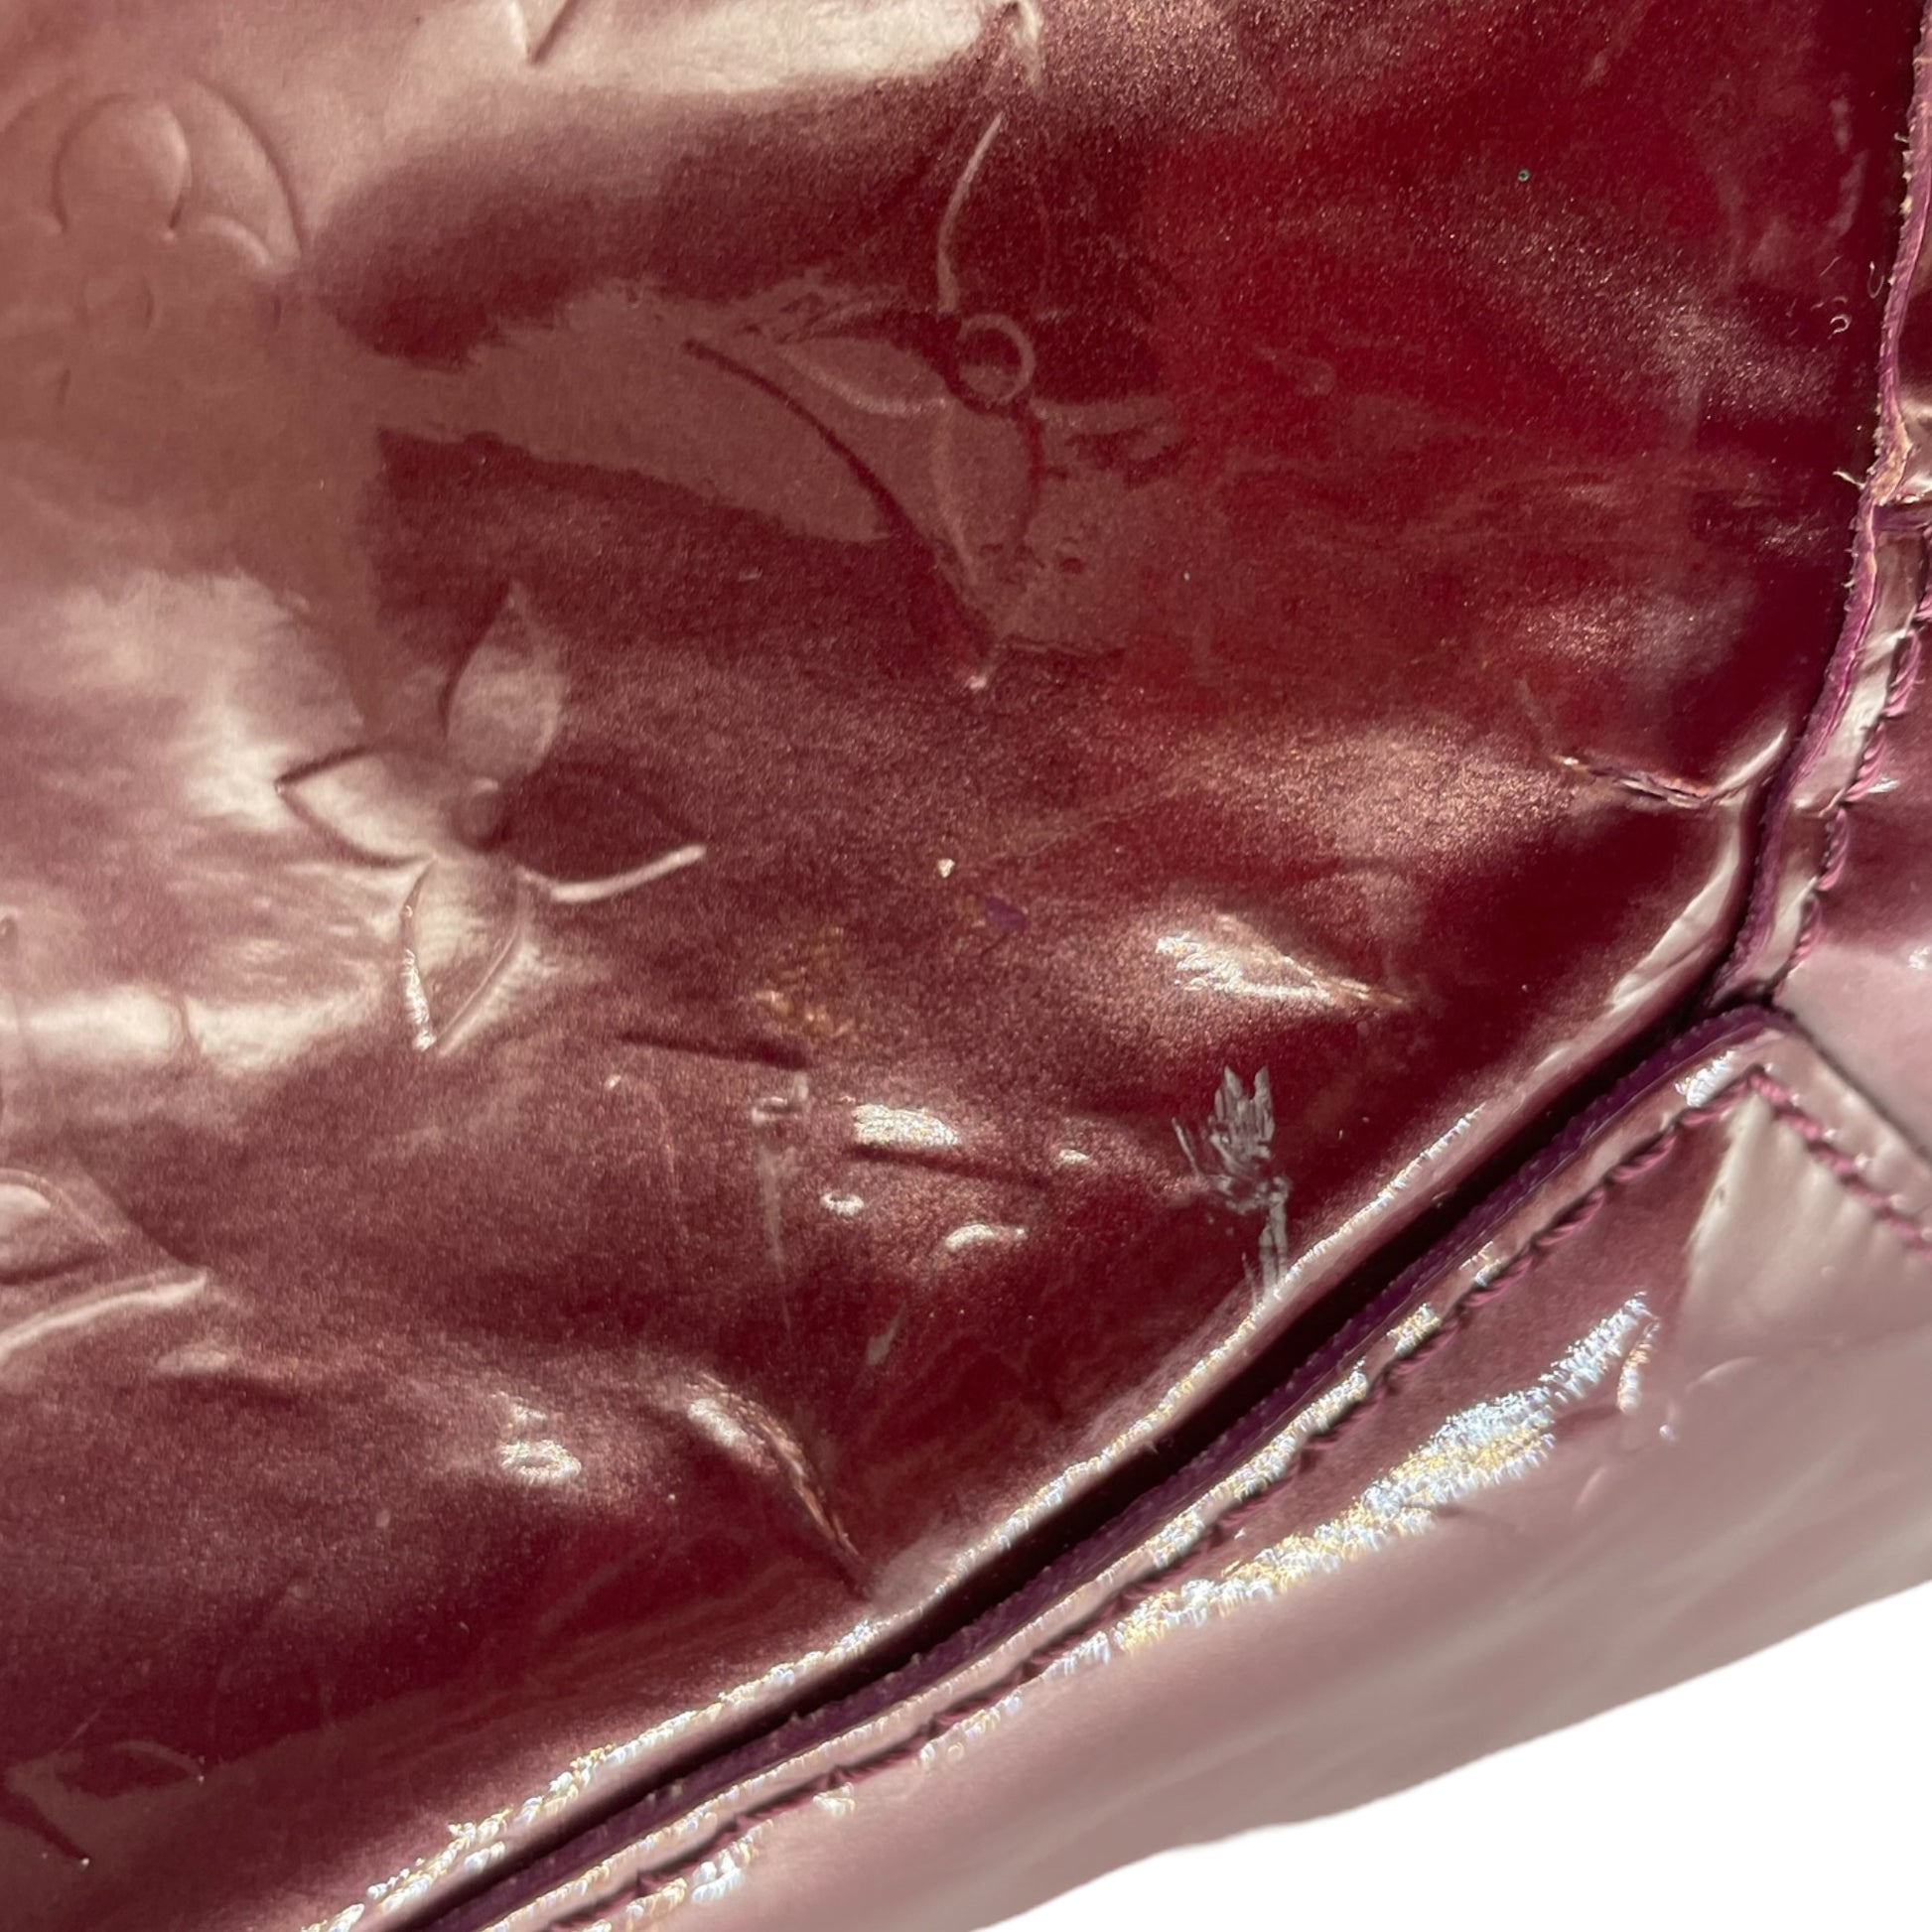 Buy Louis Vuitton Handbag Bellevue Gm Monogram Vernis Shoulder Bag